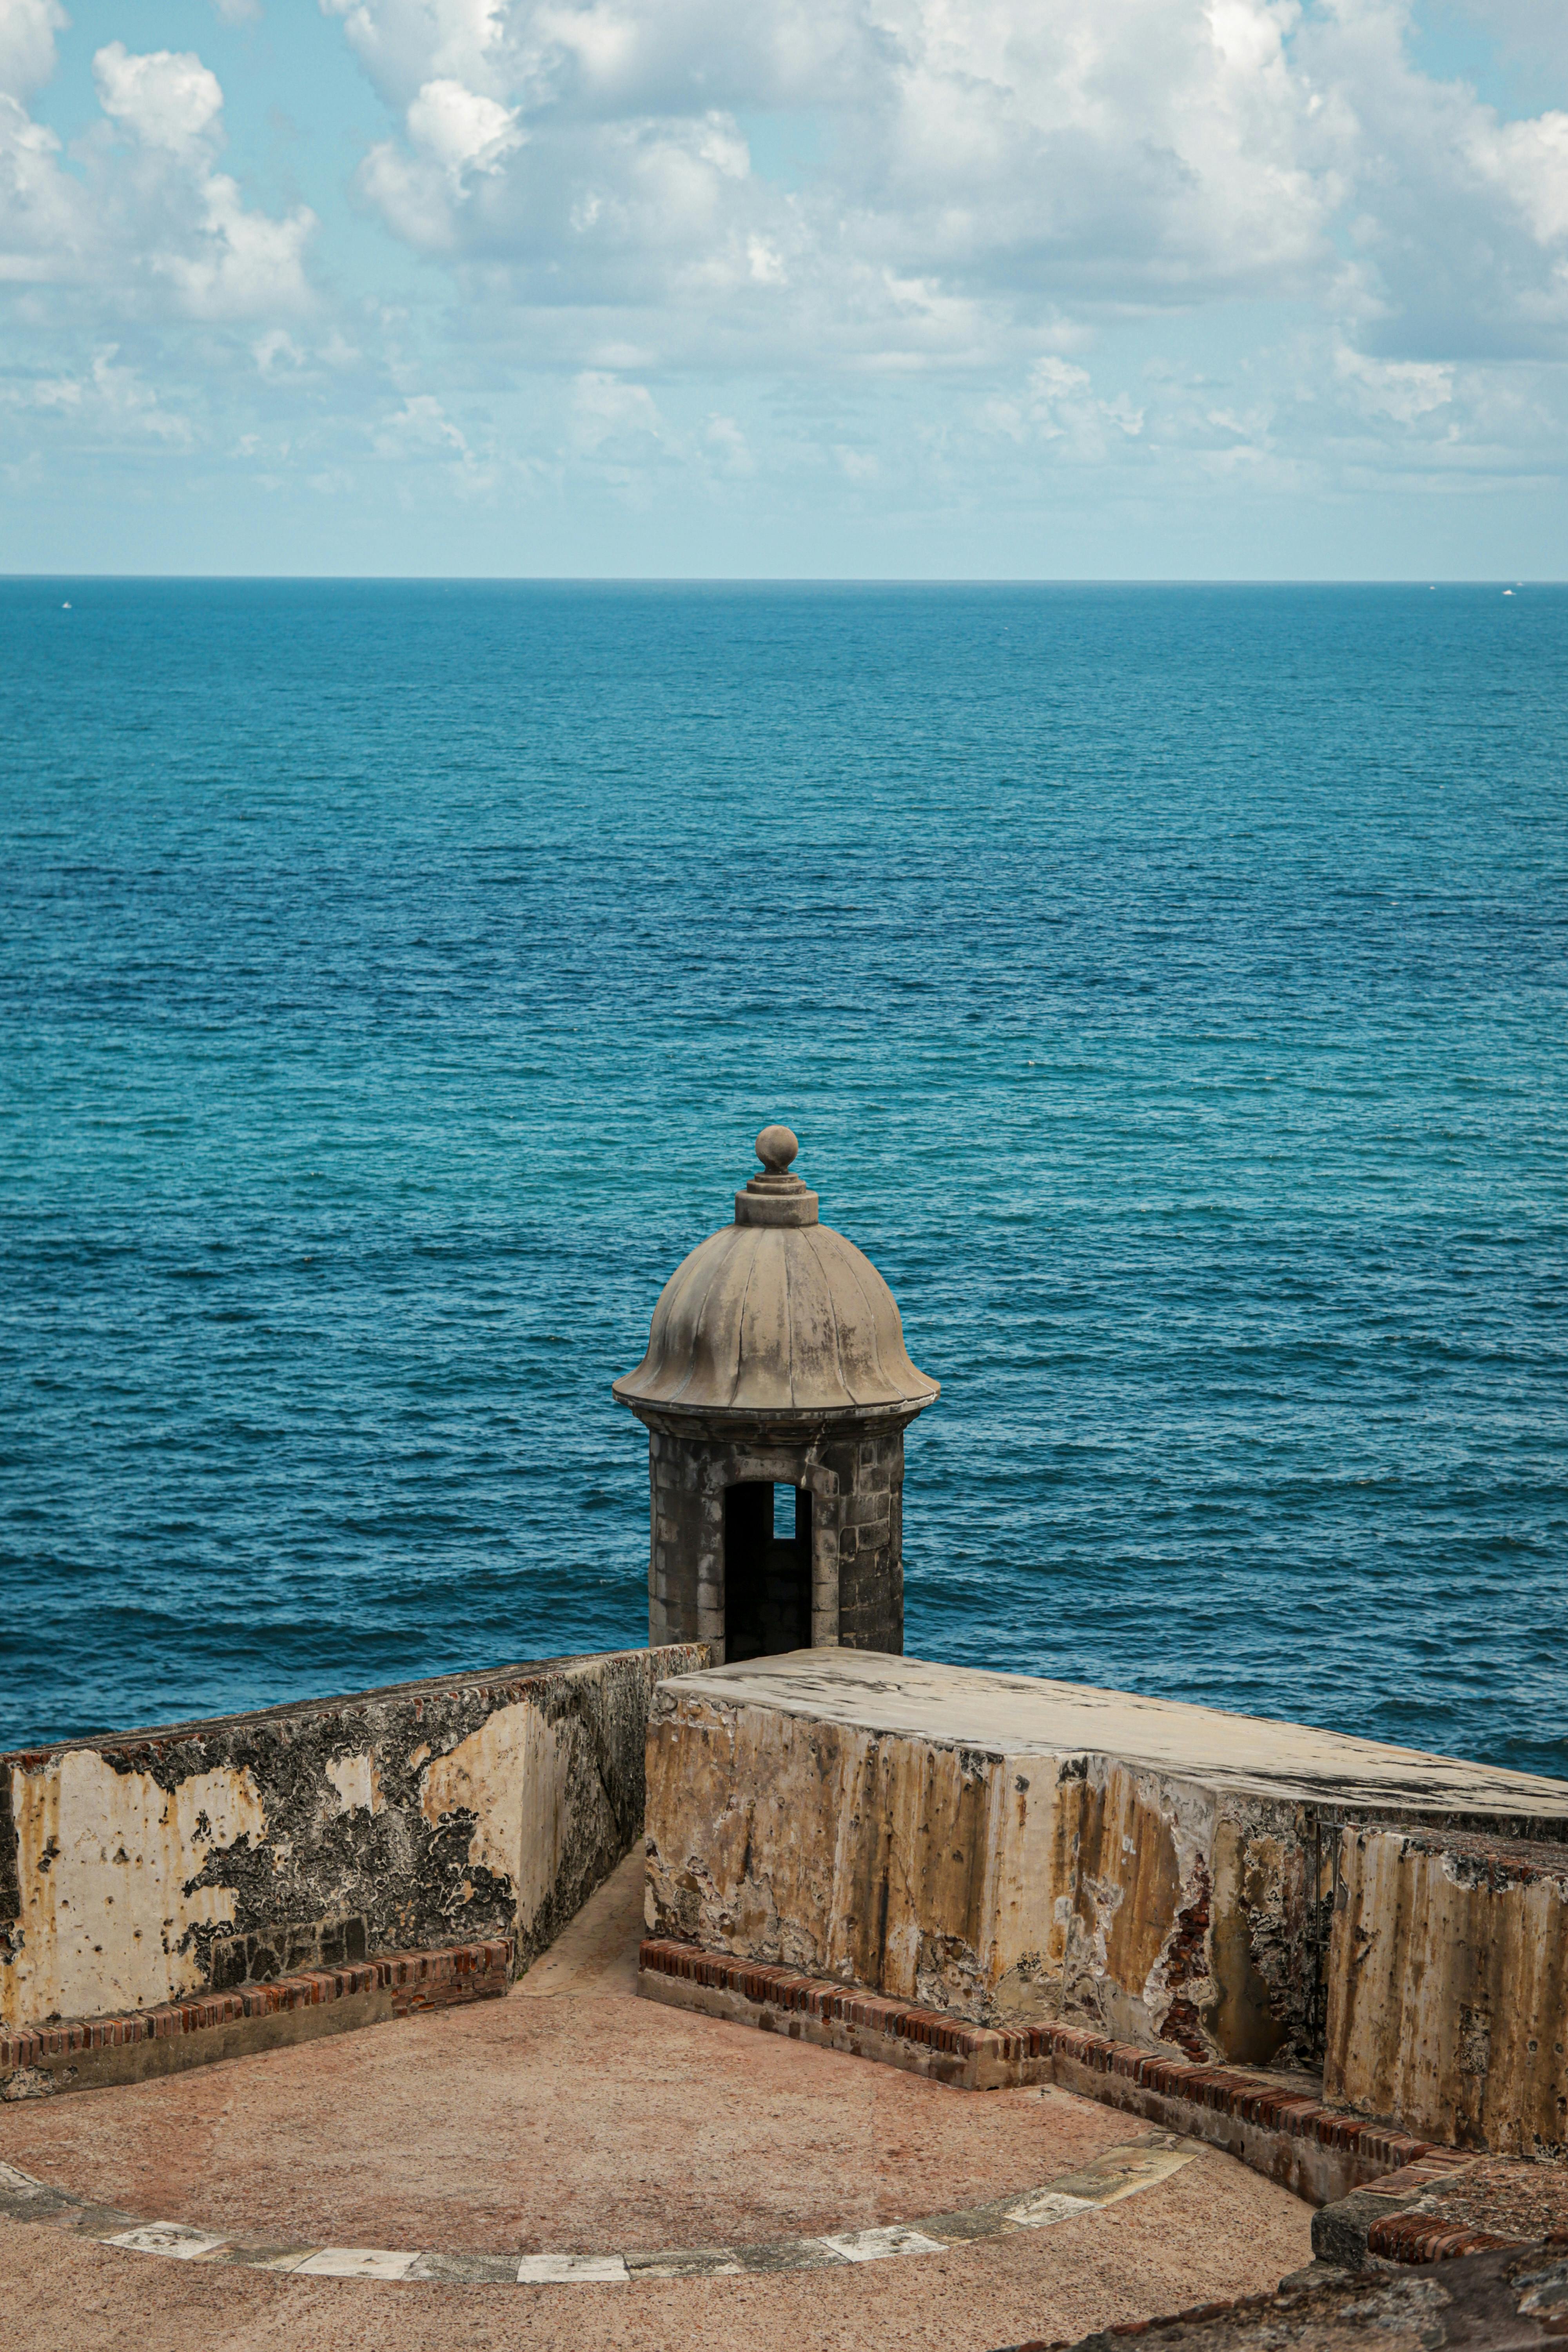 Best El Morro La Habana Royalty-Free Images, Stock Photos